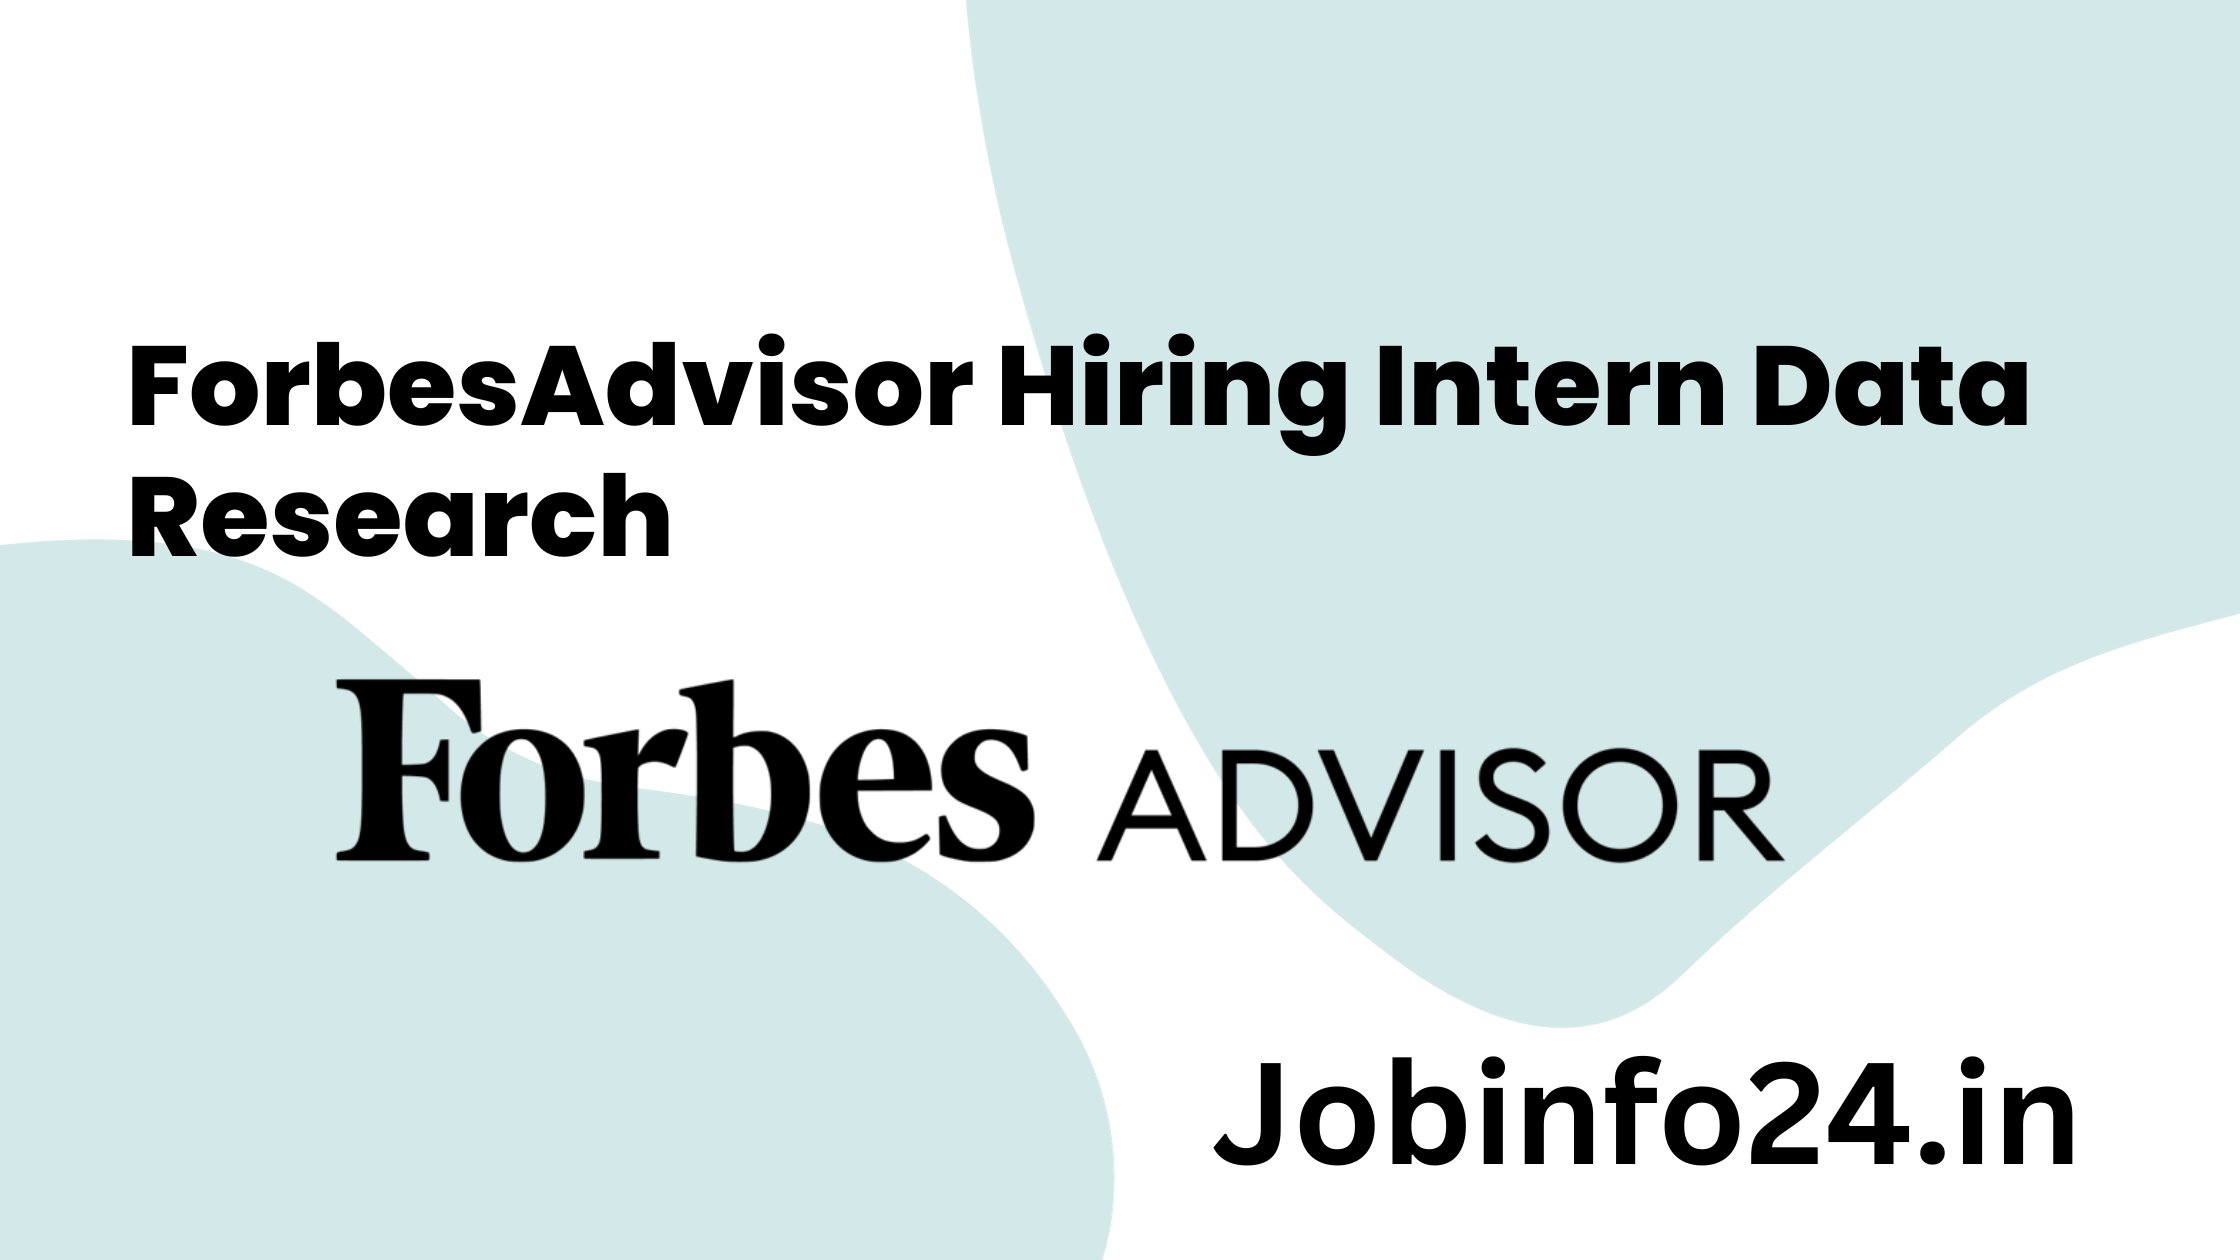 ForbesAdvisor Hiring Intern Data Research